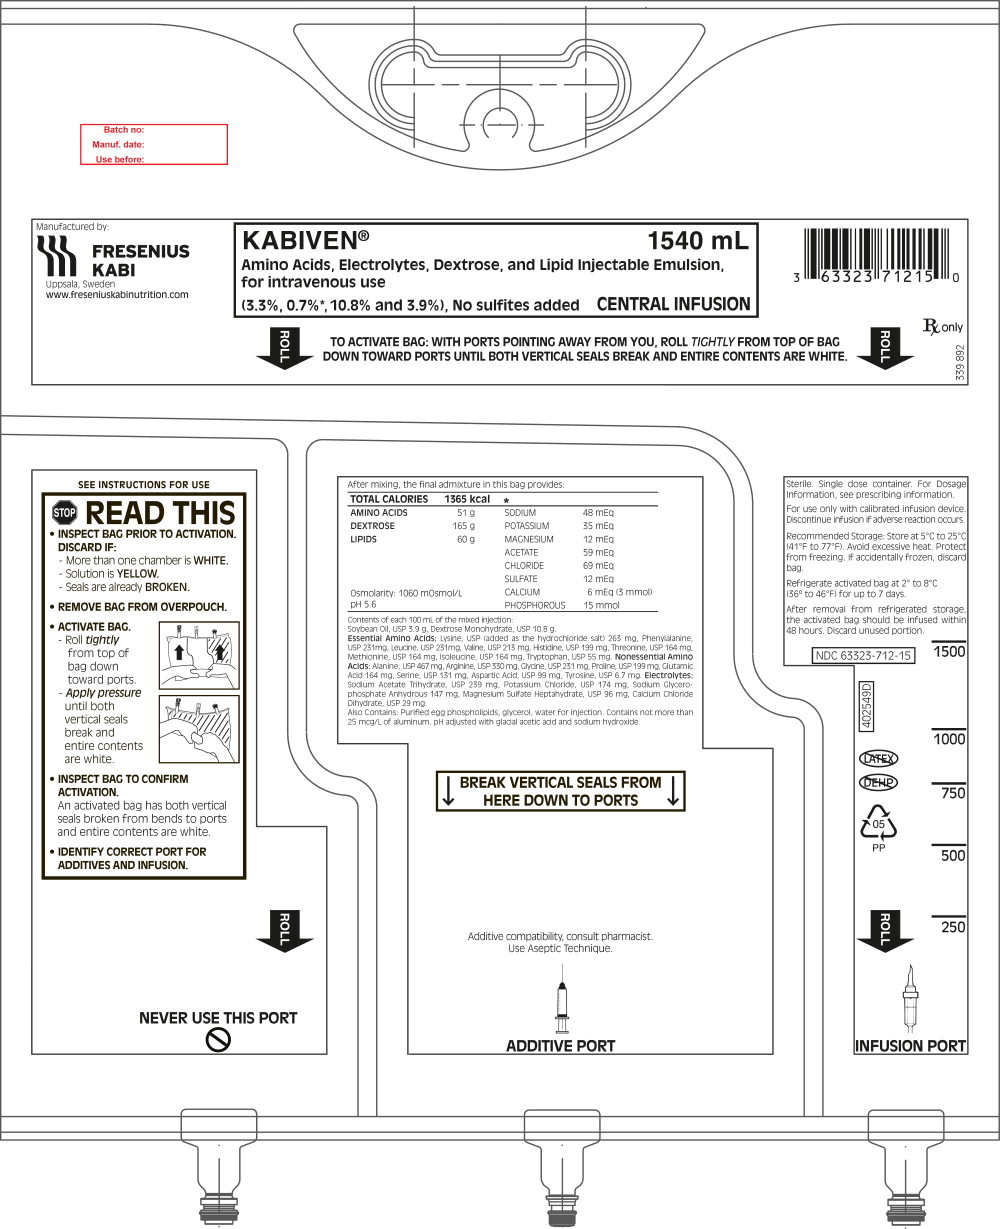 PACKAGE LABEL - PRINCIPAL DISPLAY PANEL - KABIVEN® 1540 mL Bag Label
